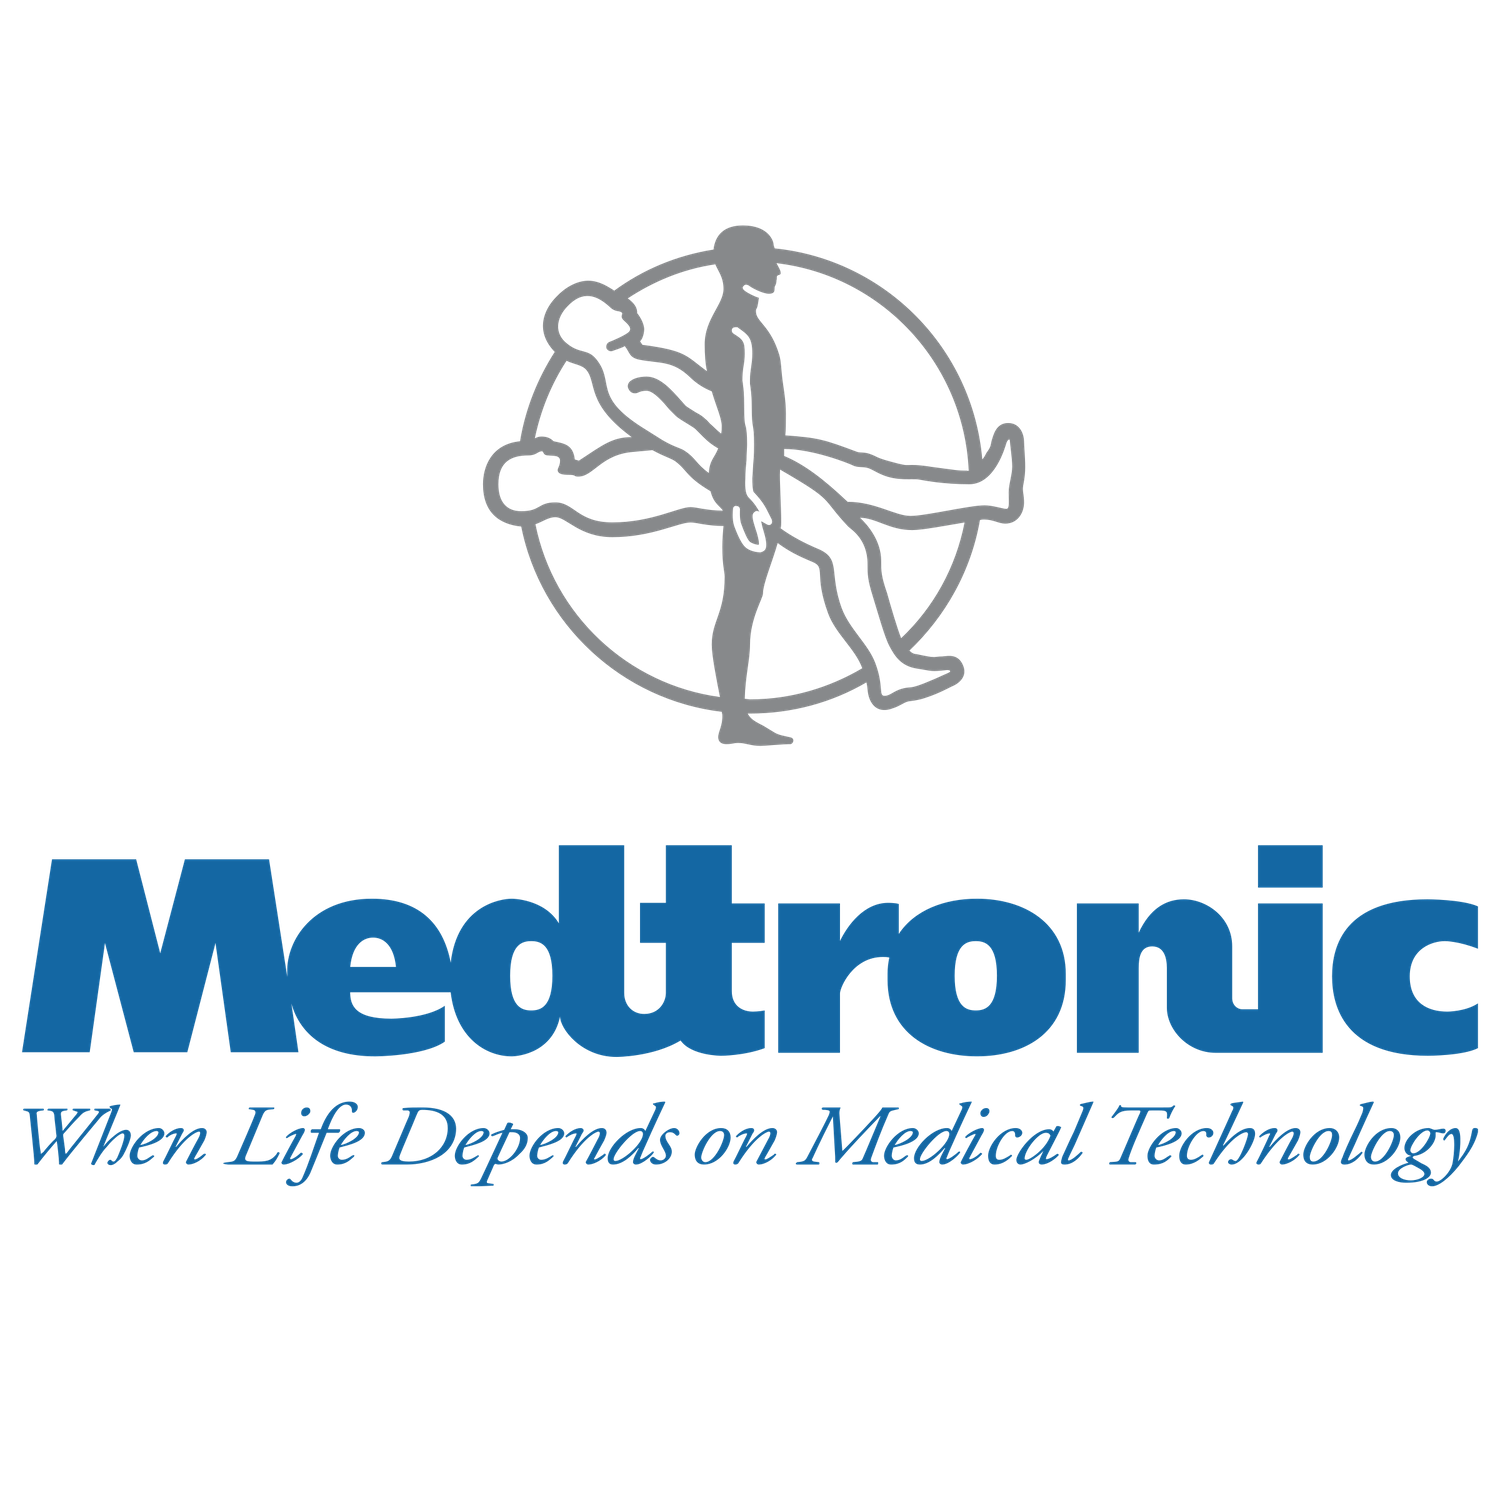 medtronic-logo-png-transparent.png